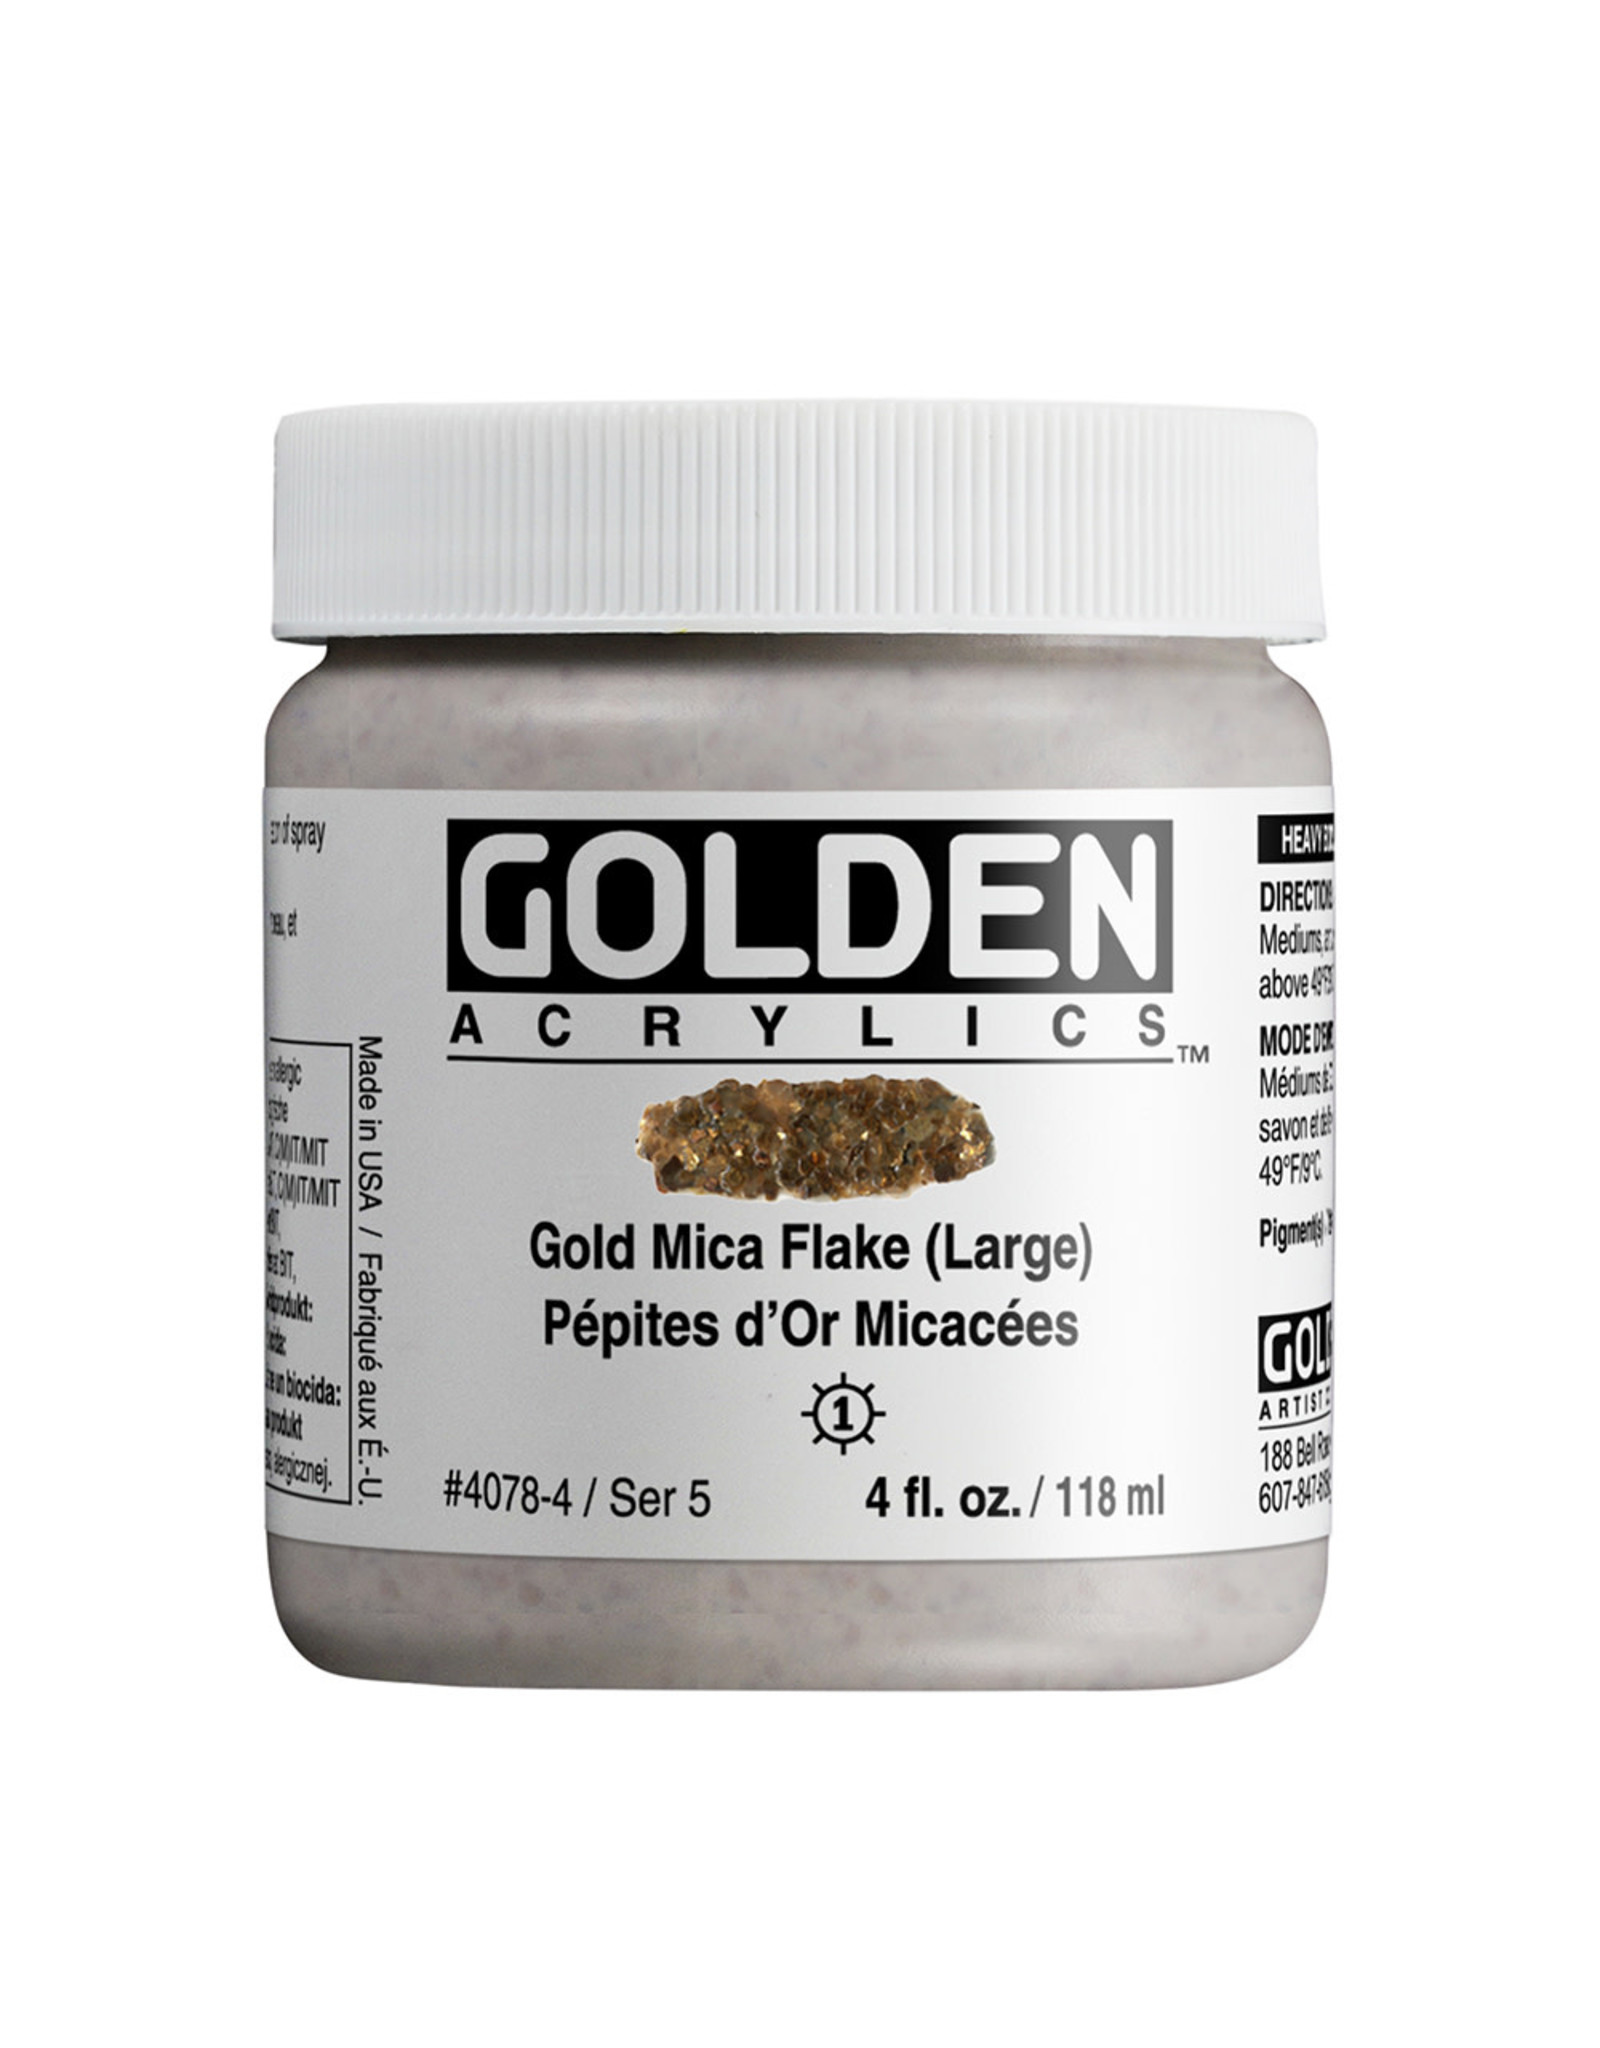 Golden Golden Heavy Body Acrylic Paint, Gold Mica Flake Large, 4oz